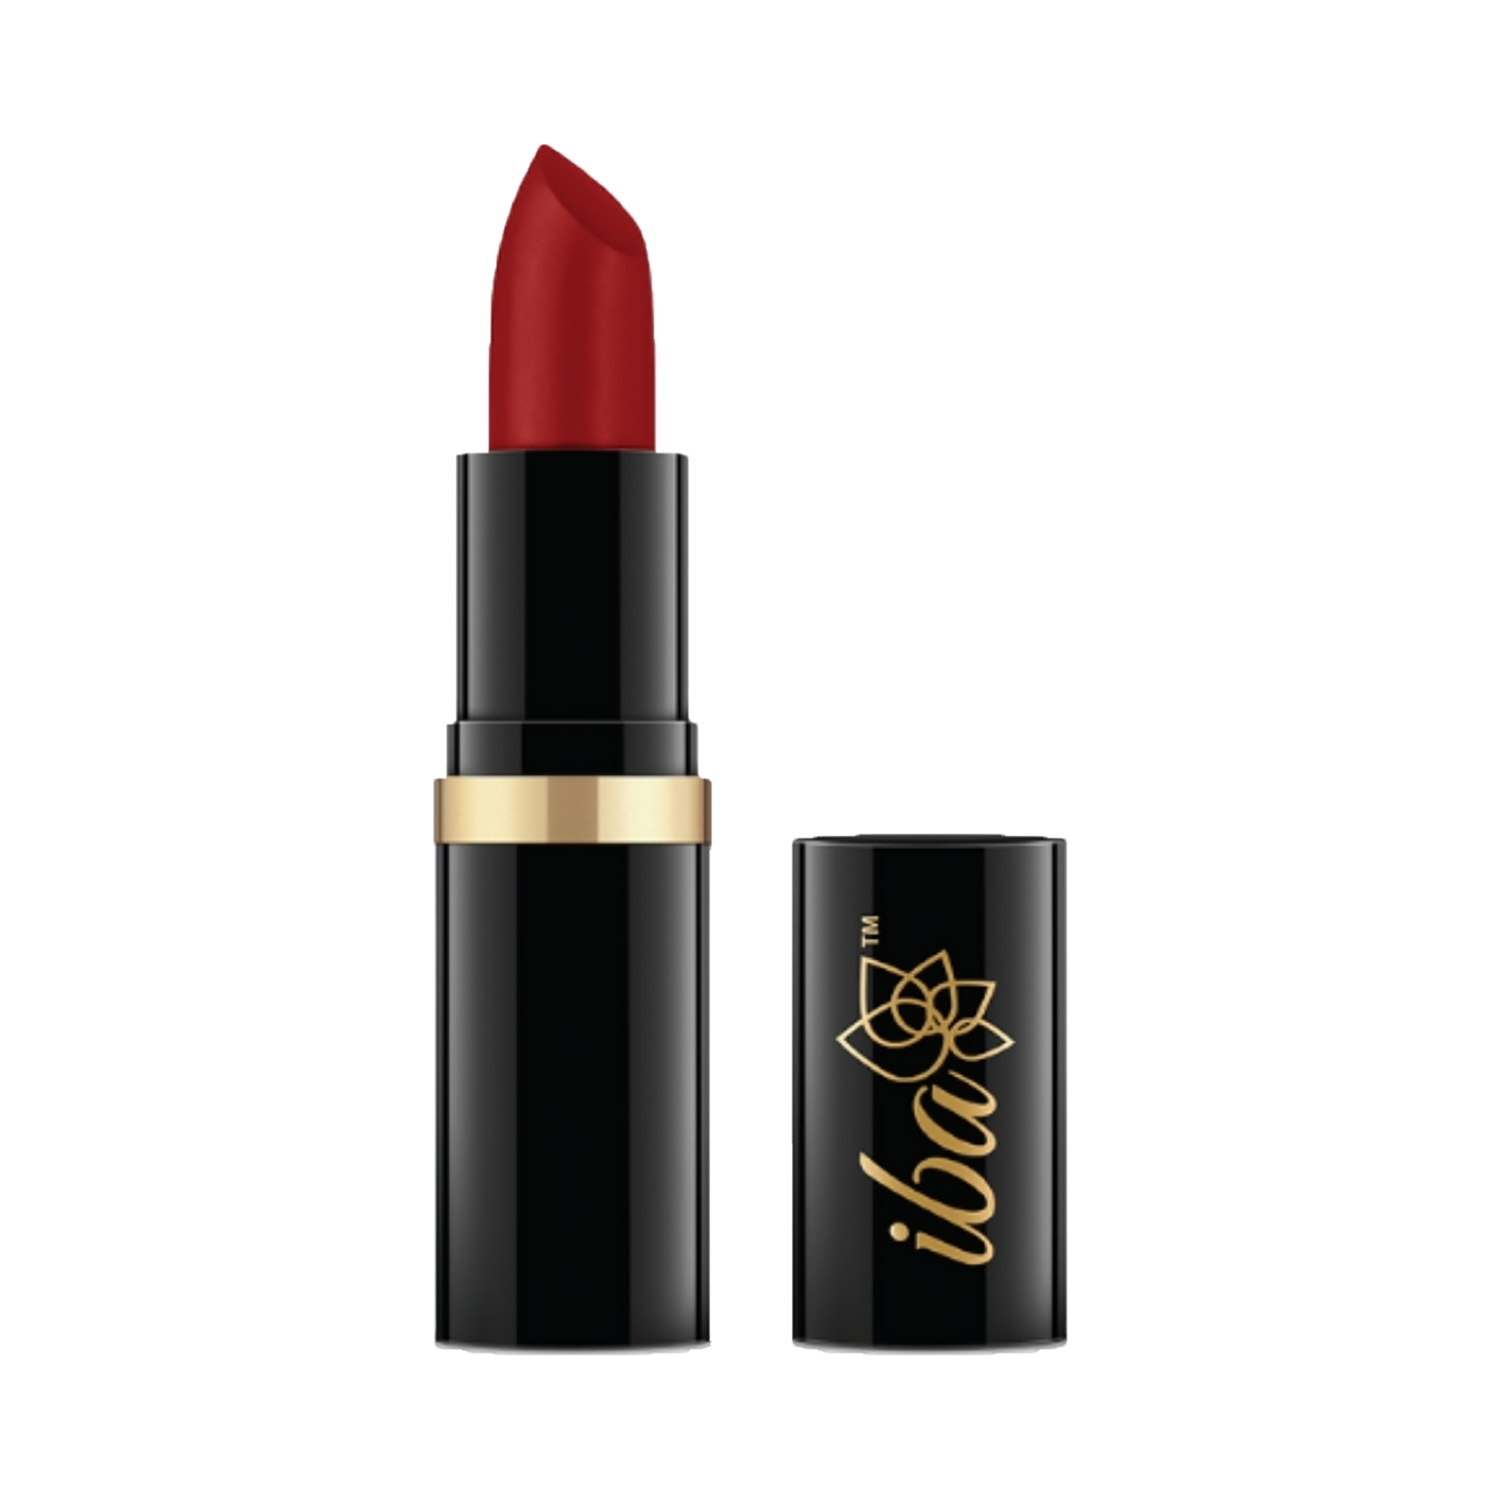 Iba | Iba Pure Lips Moisture Rich Lipstick - A66 Red Glam (4g)